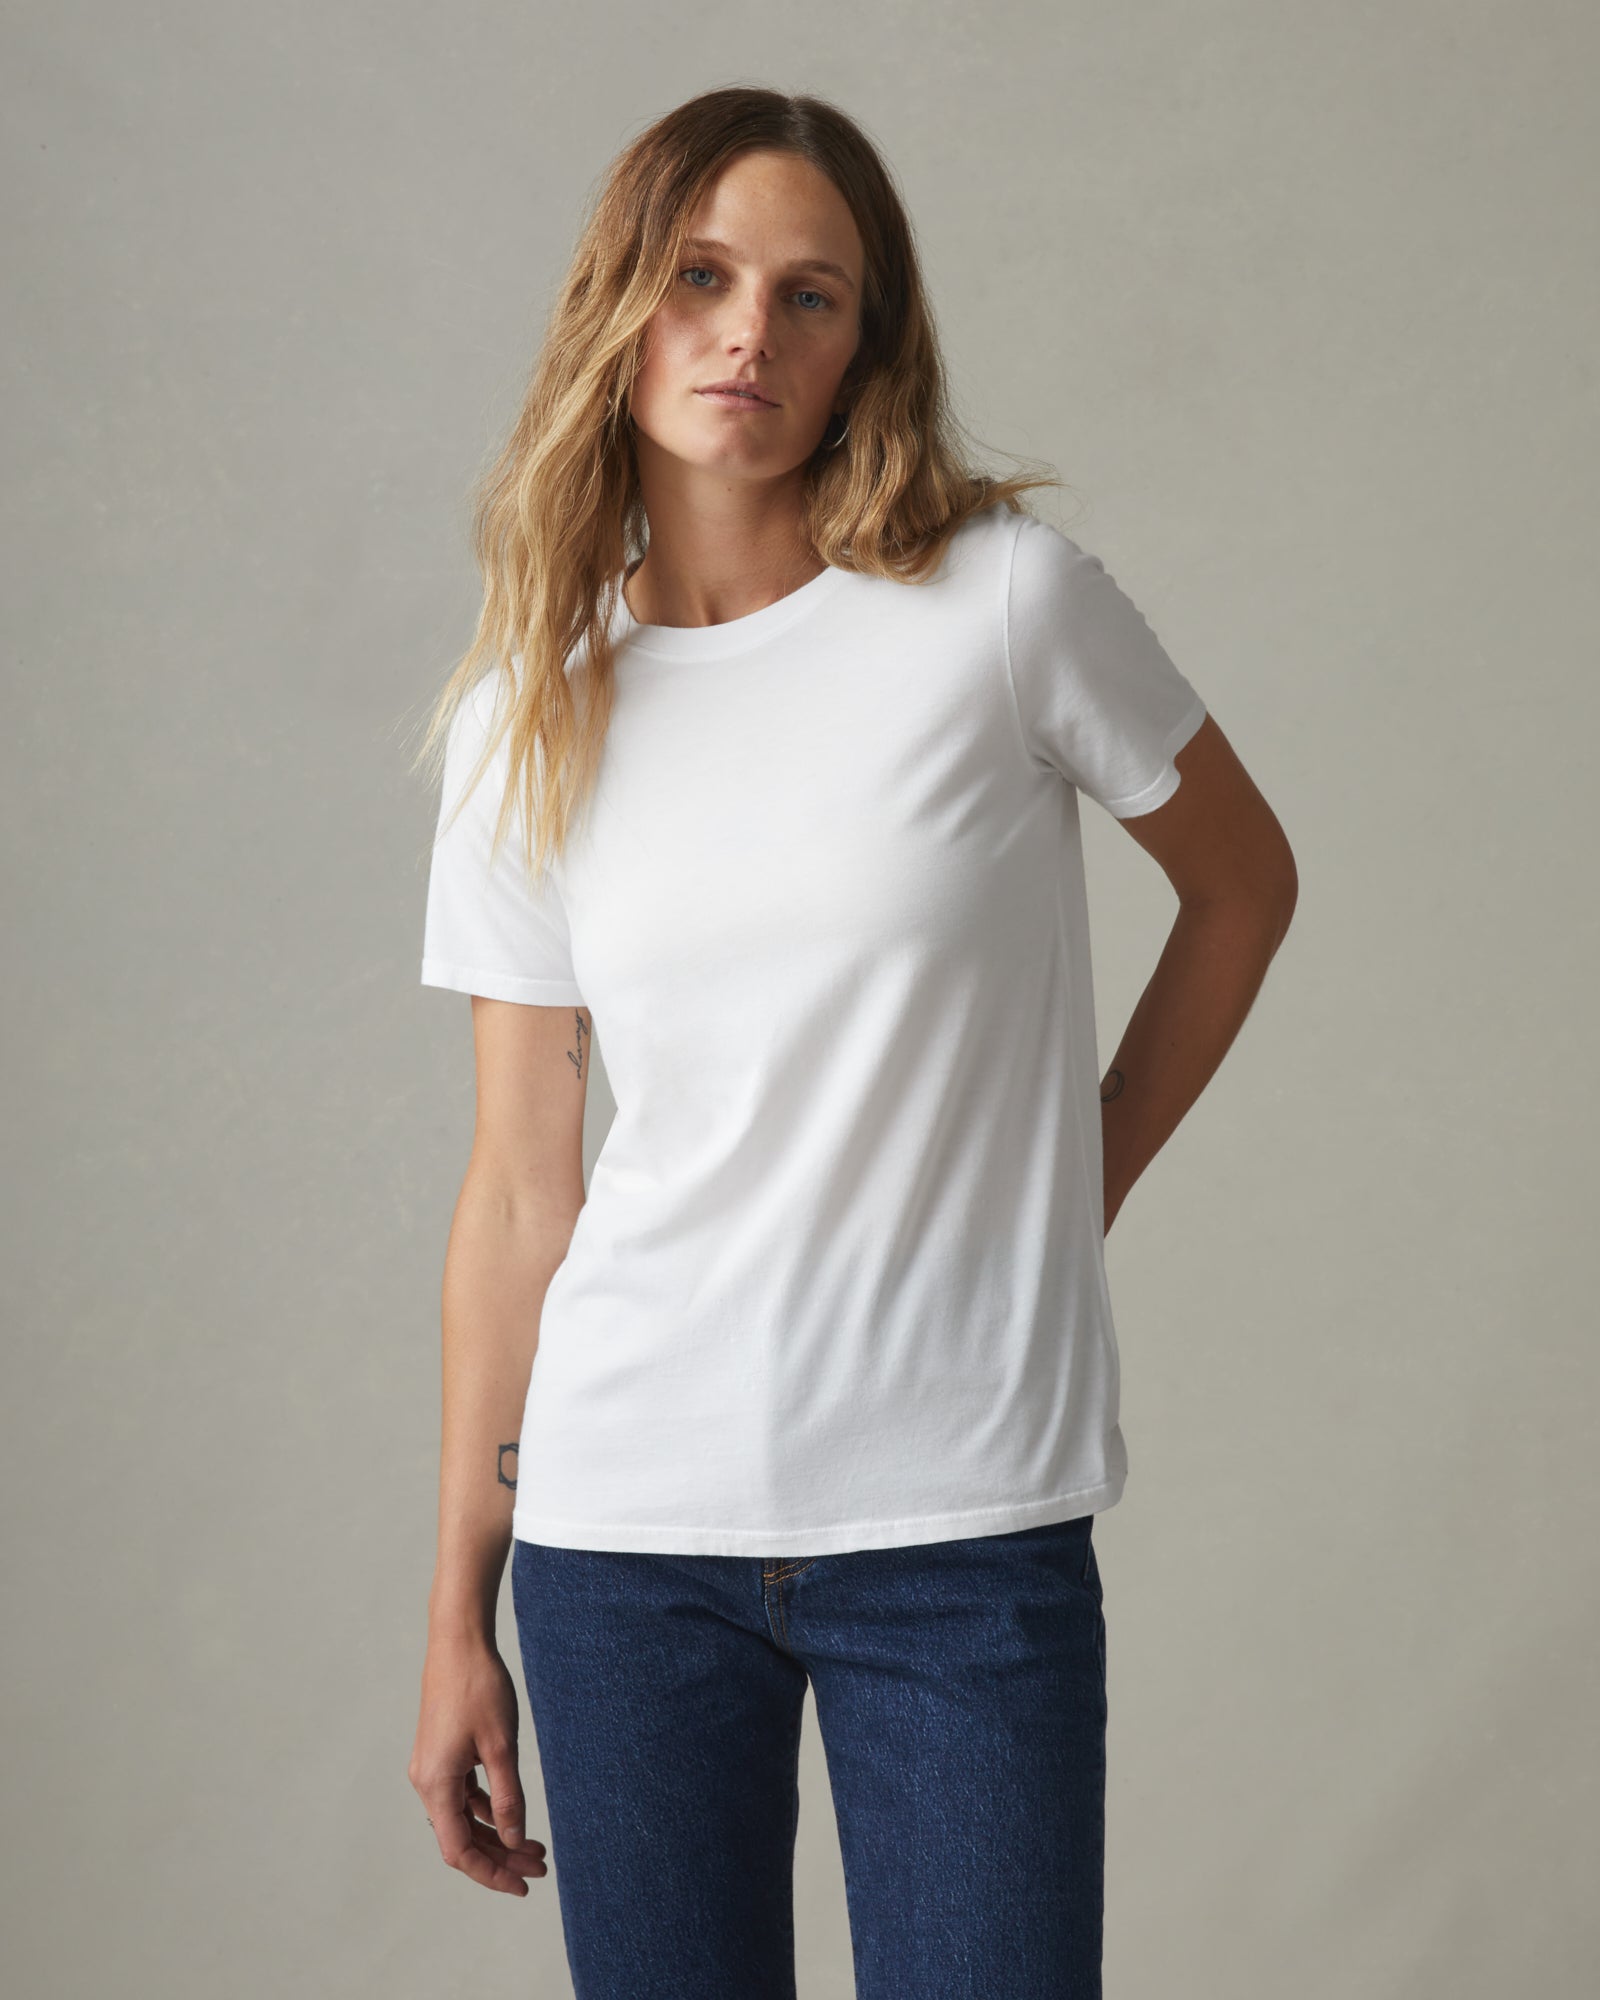 Plain 3/4th Sleeve Ladies Designer Cotton Top, Size: L-XL-XXL at